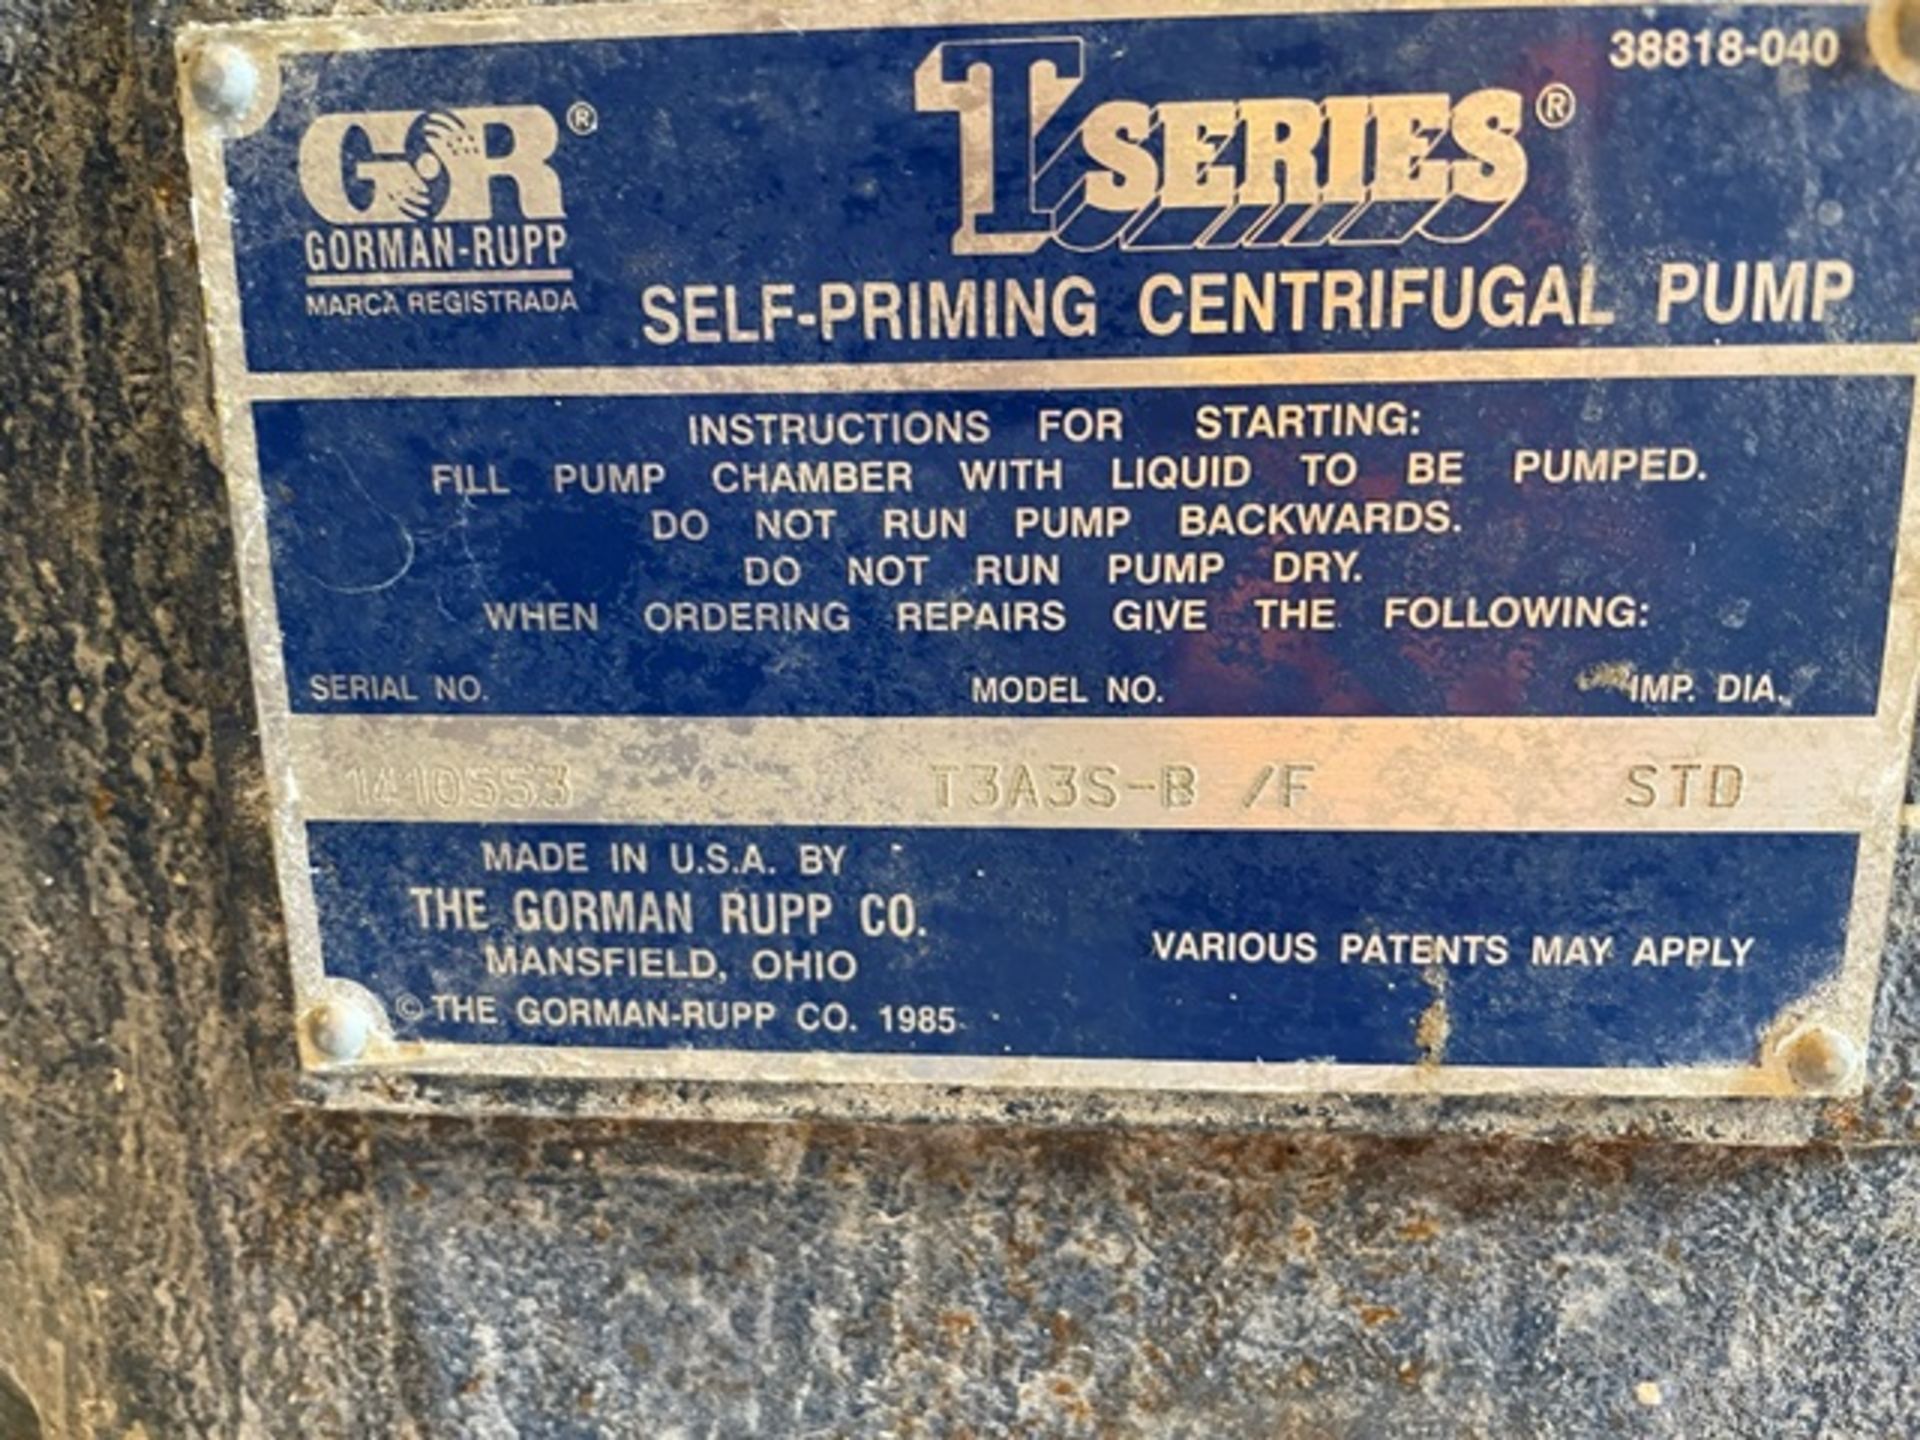 Reliance 30 HP Motor w/Gorman Rupp Super T Series Pump, Rigging & Loading Fee: $475 - Image 2 of 3